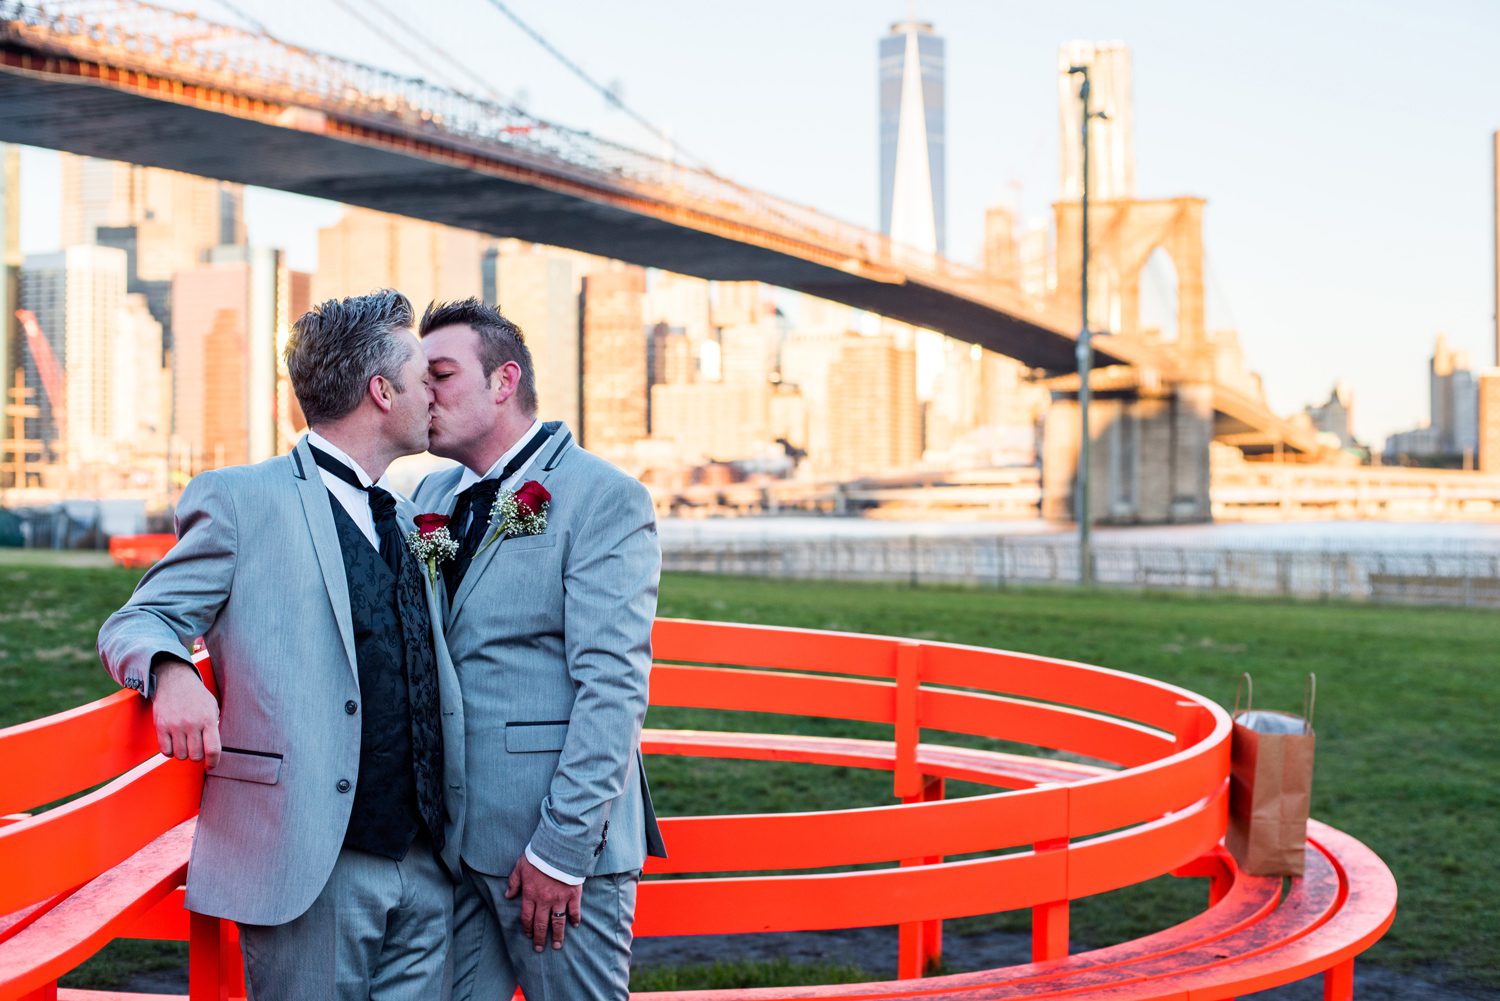 Brooklyn Bridge Park Wedding 